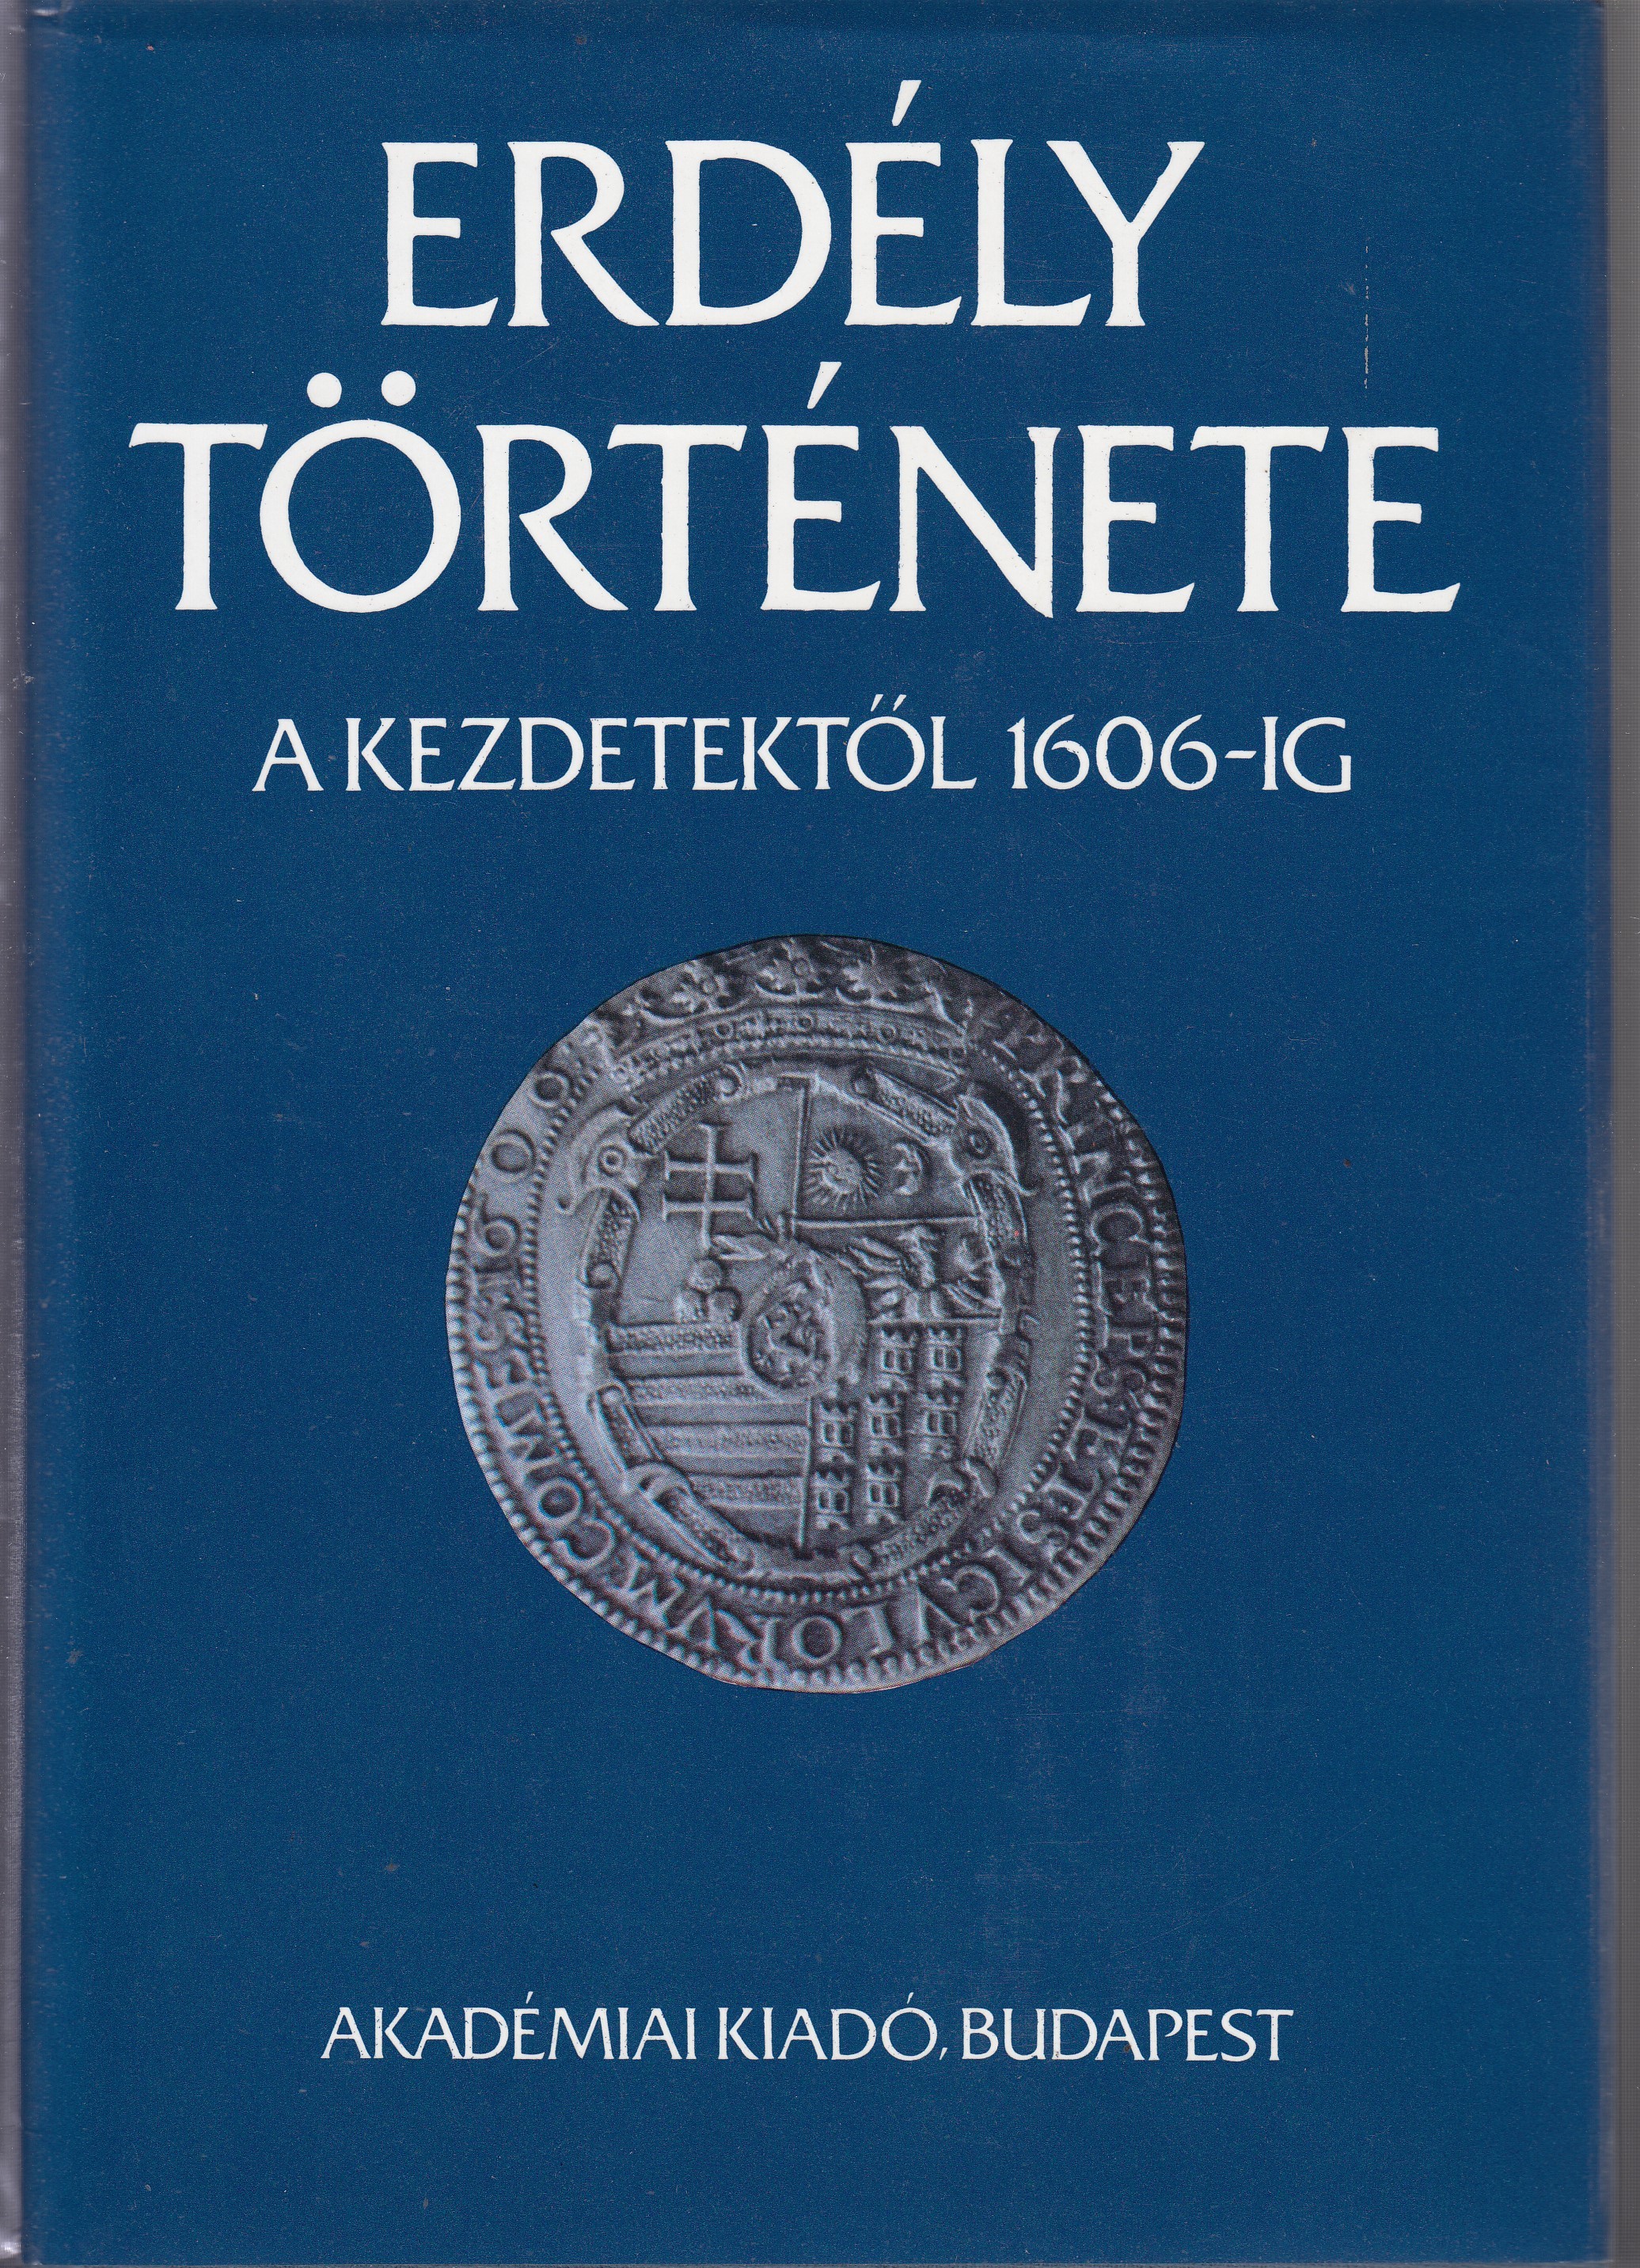 Erdely tortenete (Hungarian Edition) - Kopeczi, Bela